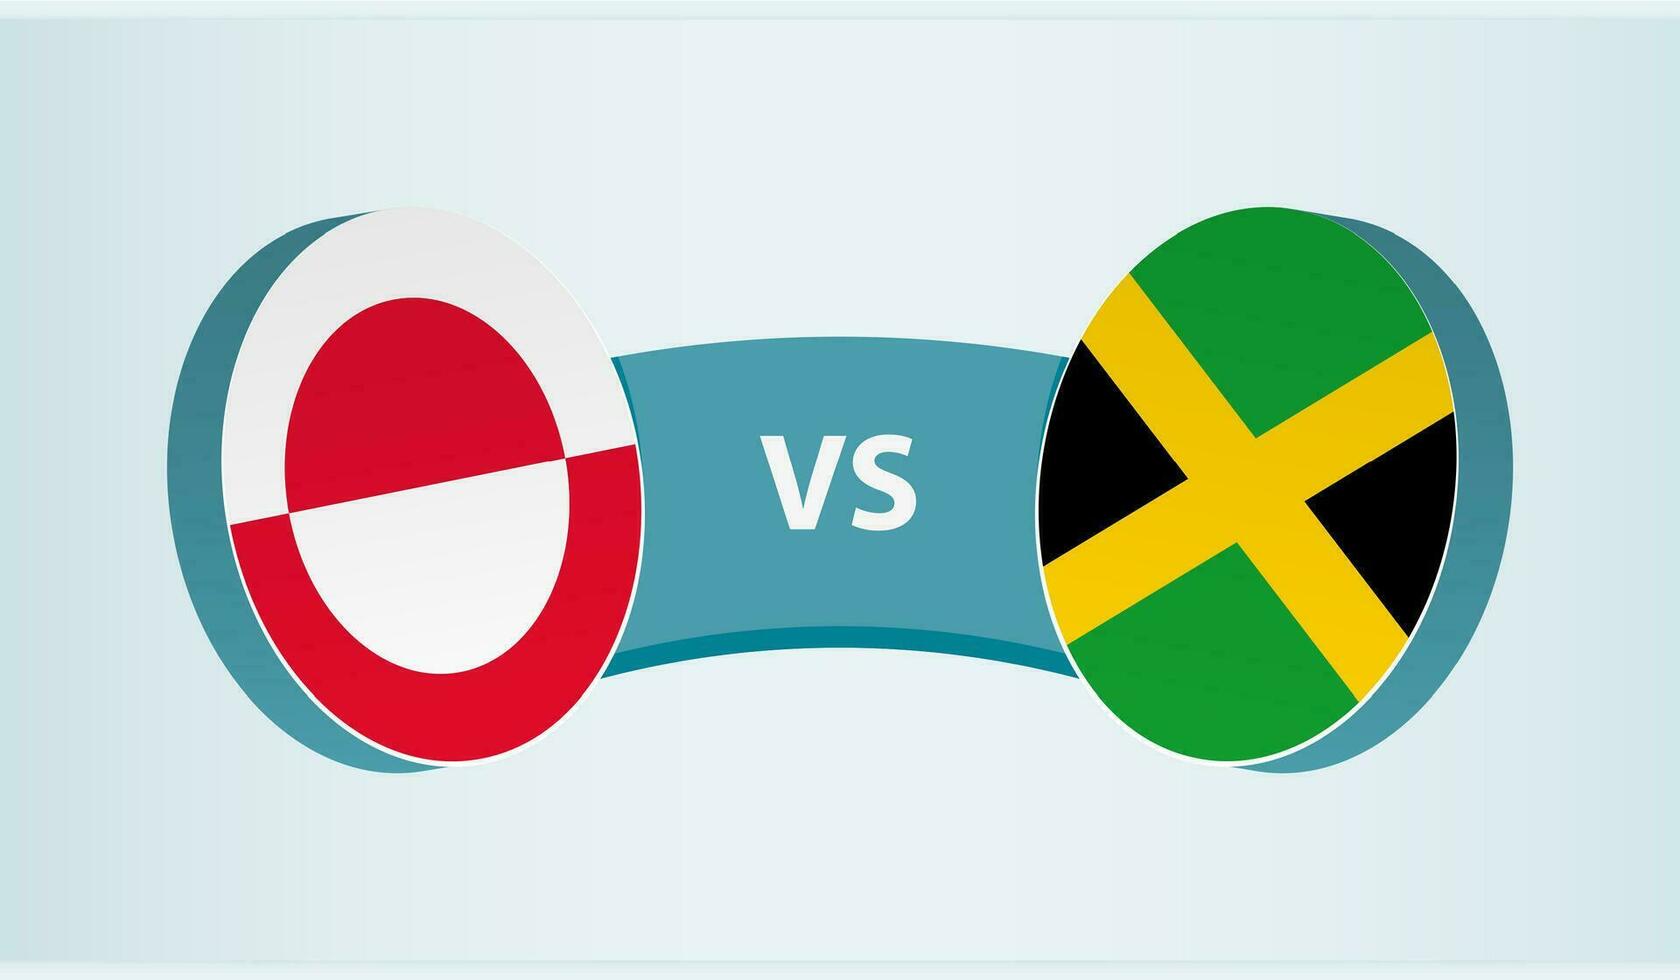 Grönland mot jamaica, team sporter konkurrens begrepp. vektor